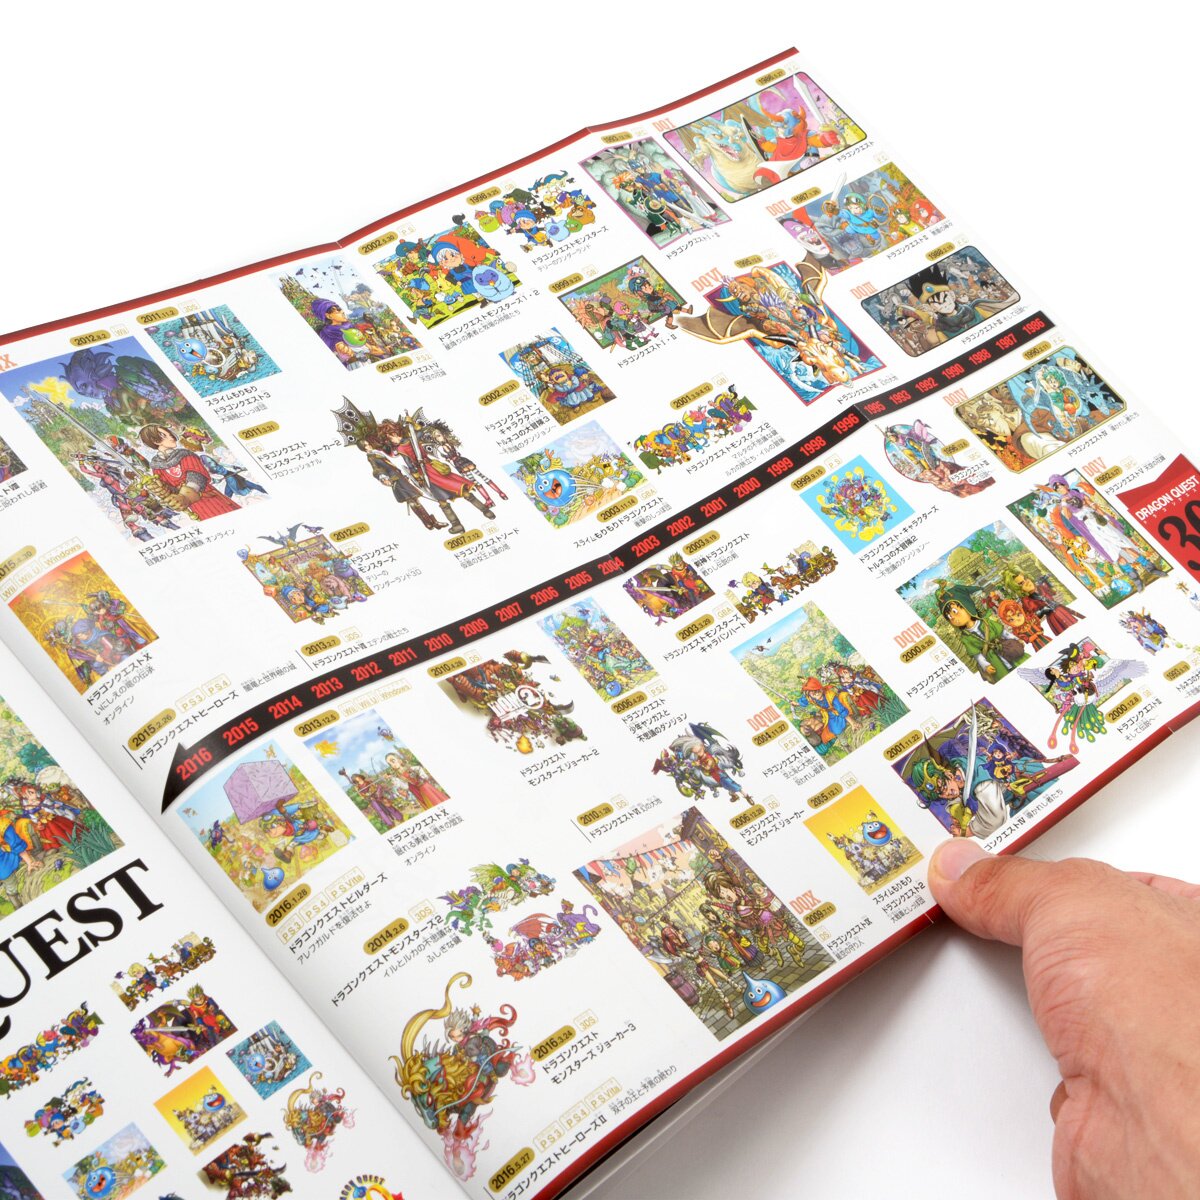 Dragon Quest Illustrations: 30th Anniversary Edition